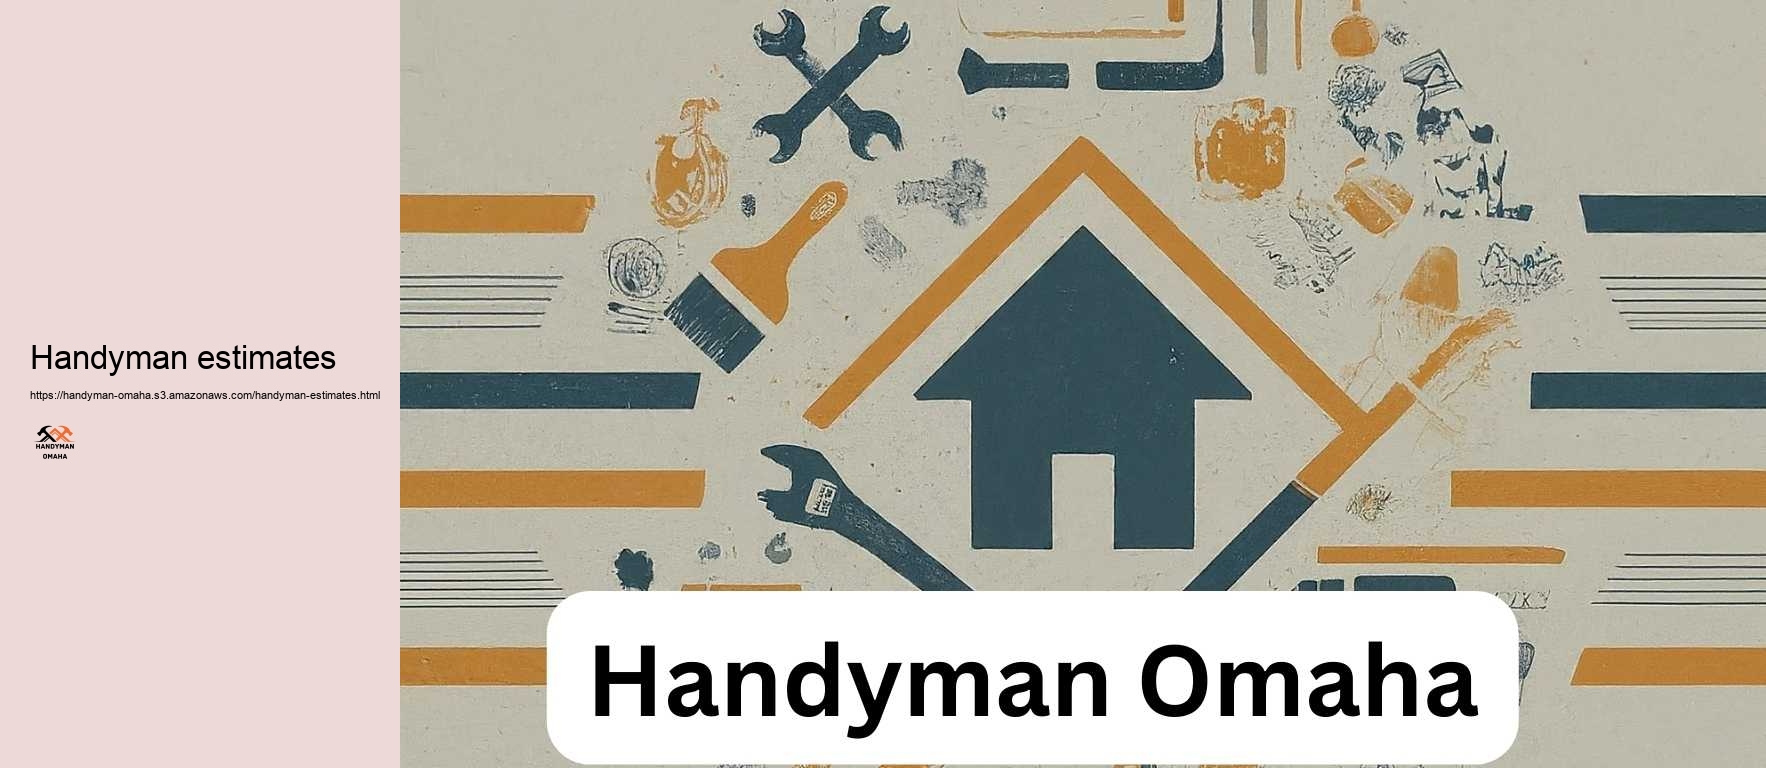 Handyman estimates